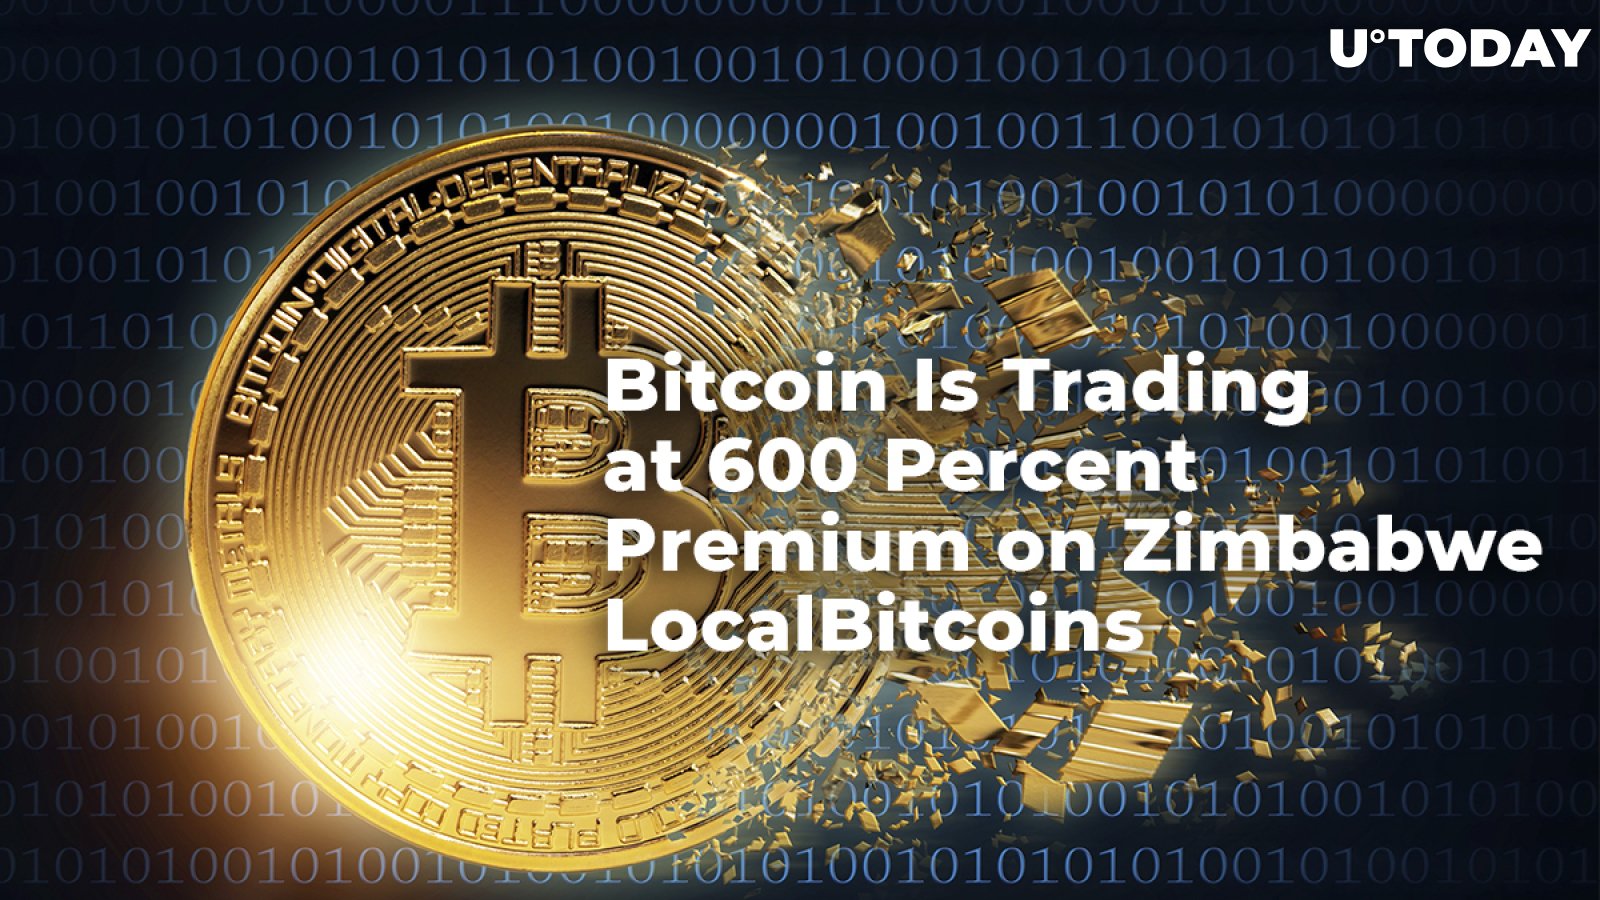 Bitcoin Is Trading at 600 Percent Premium on Zimbabwe LocalBitcoins